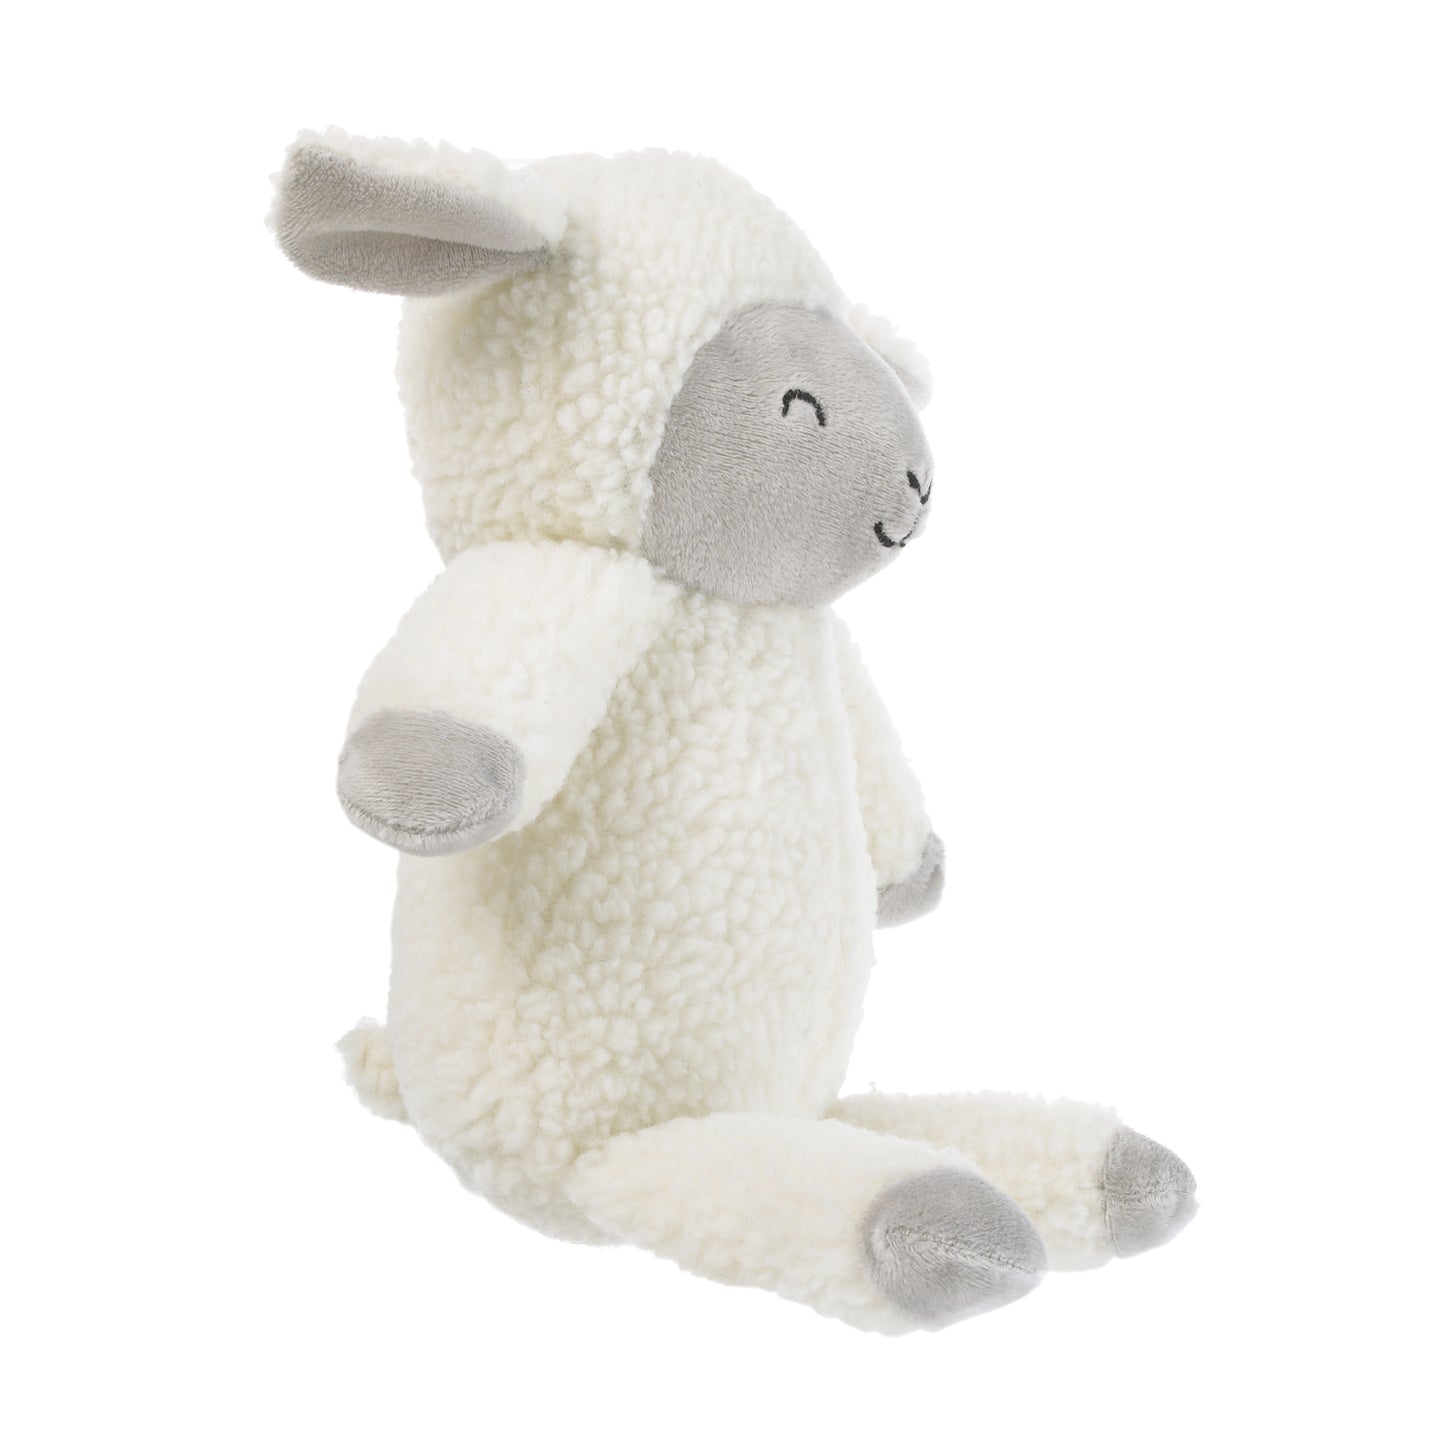 Carter's Sleepy Sheep White and Gray Plush Stuffed Animal